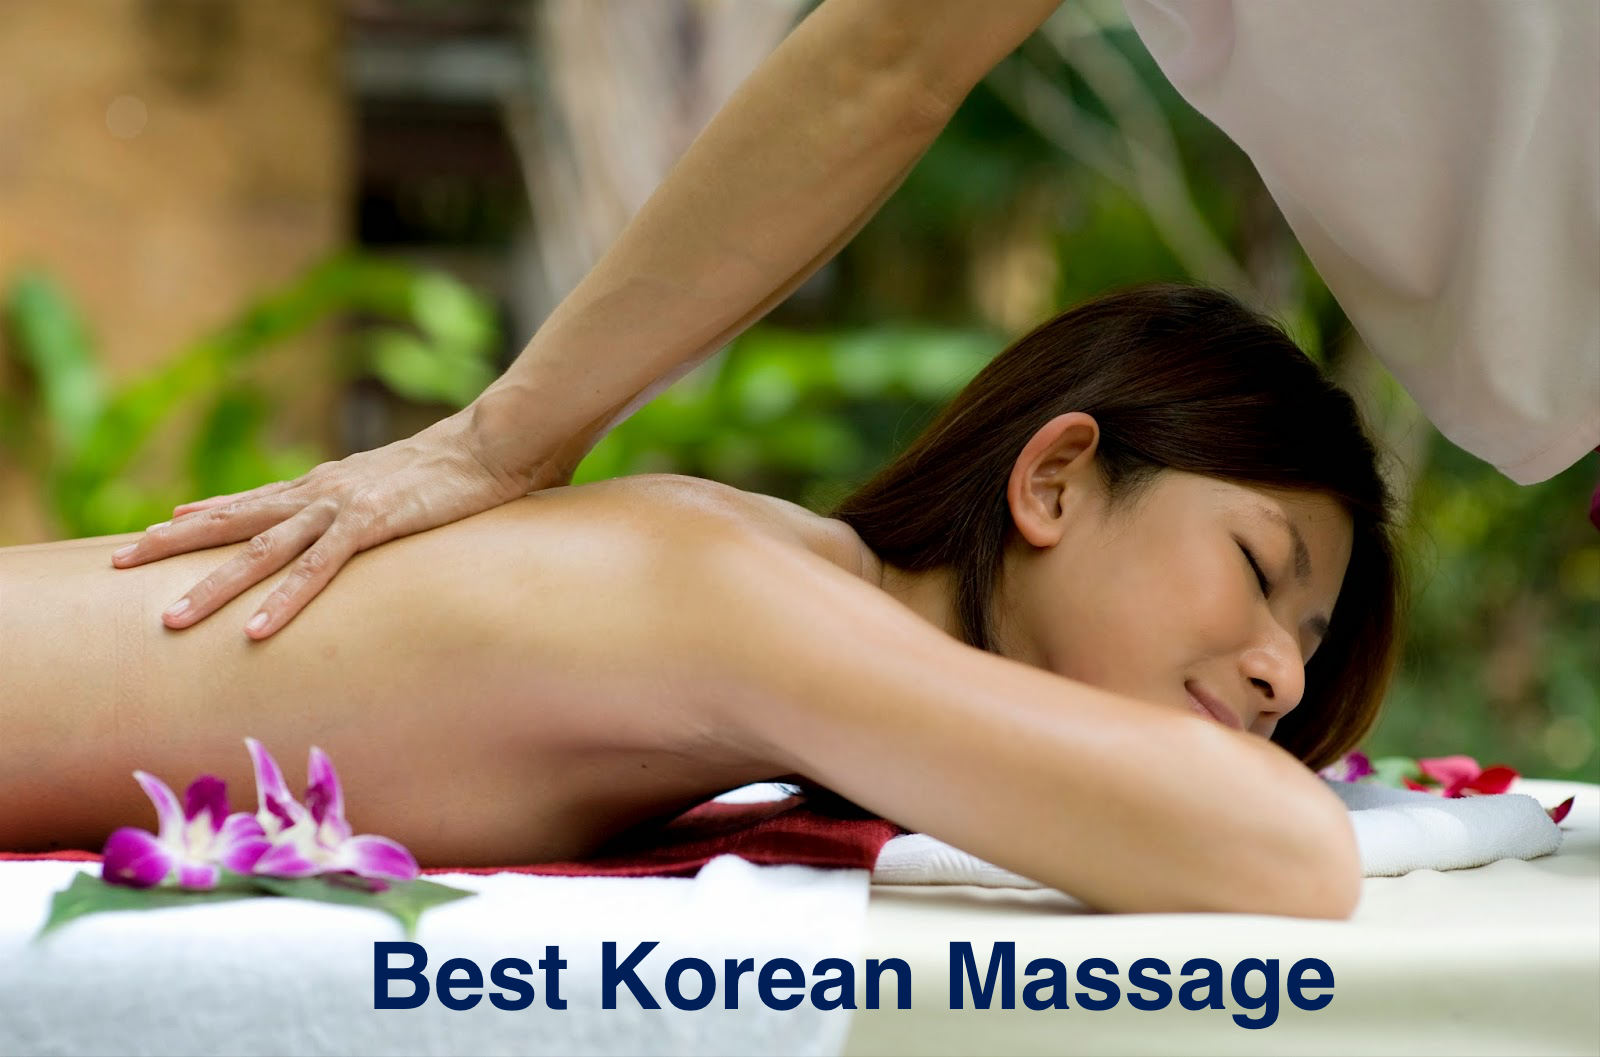 The Many Benefits Of Korean Massage